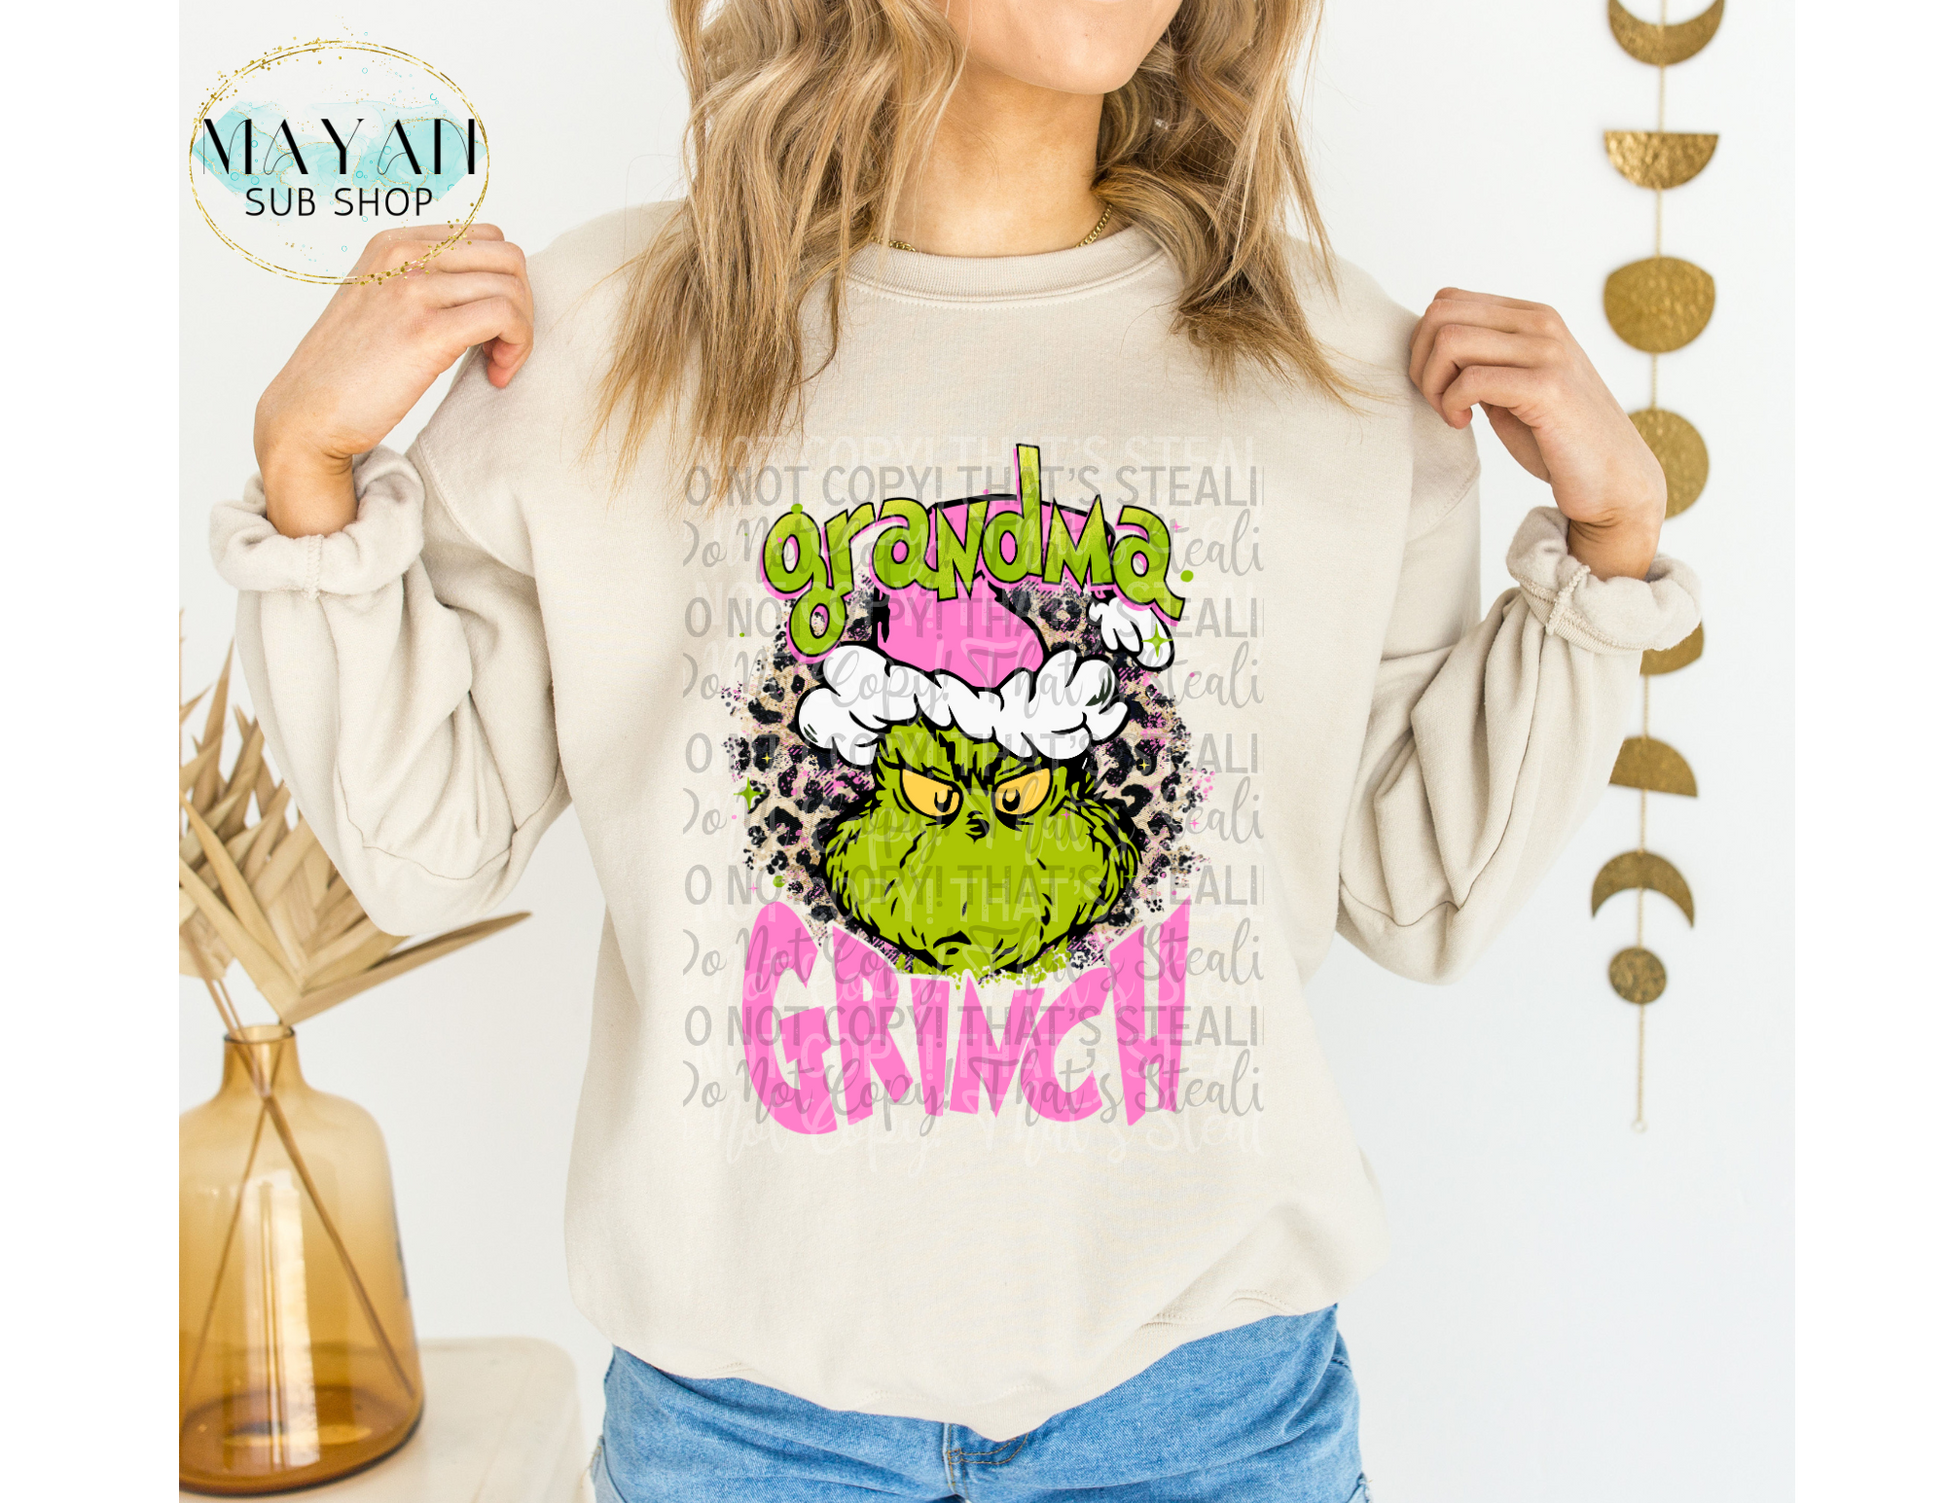 Grandma Mean One Sweatshirt - Mayan Sub Shop